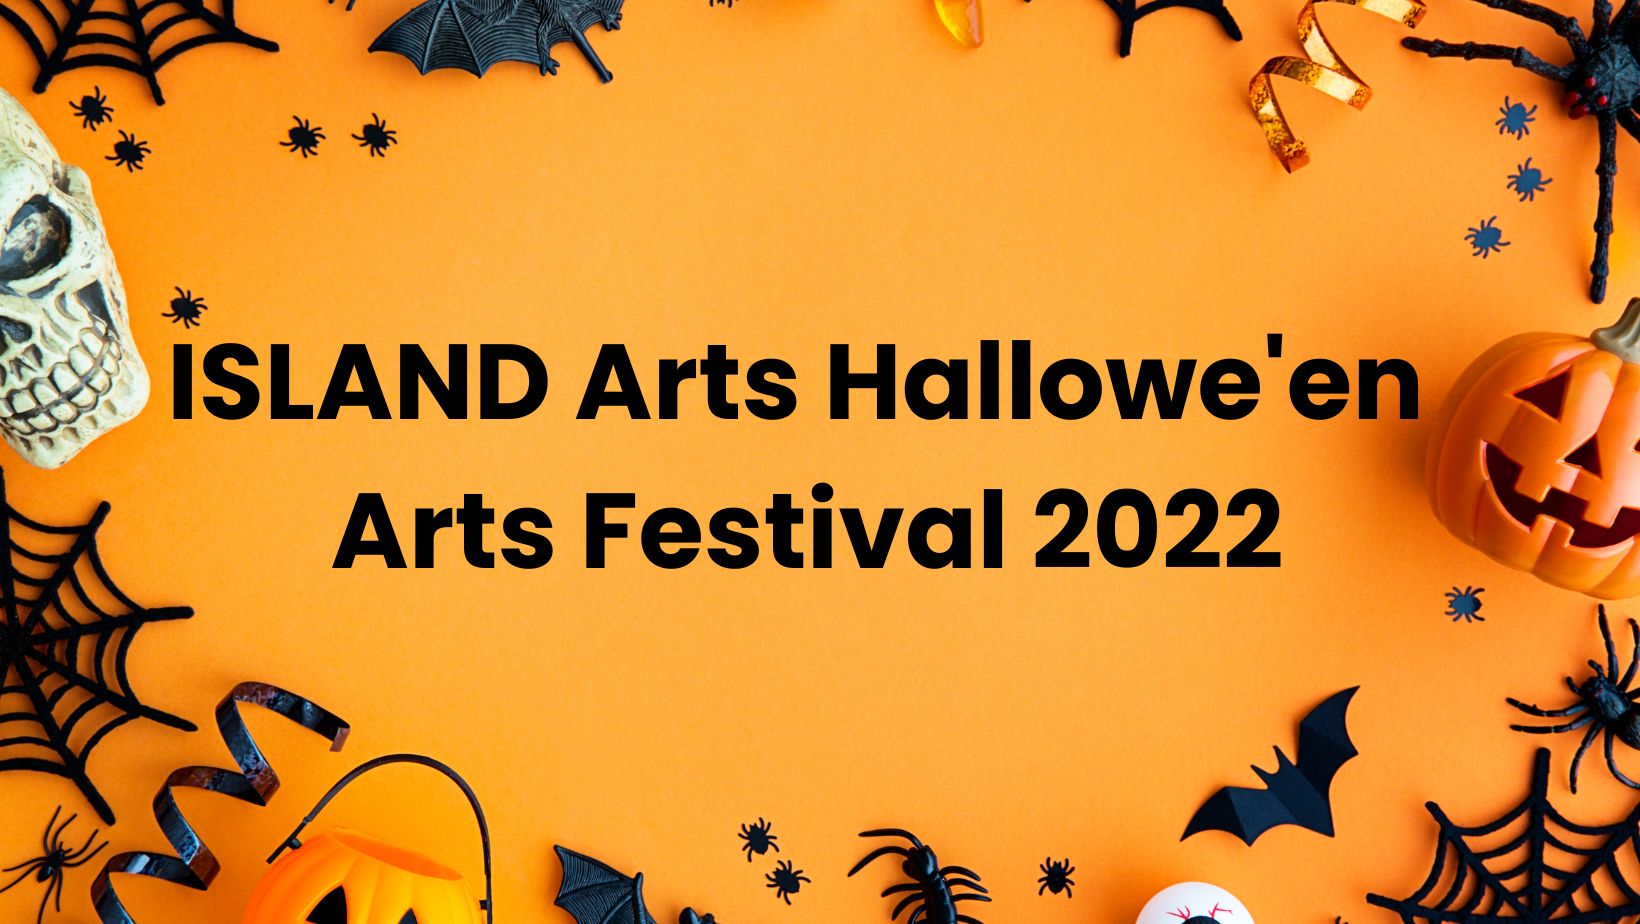 ISLAND Arts Hallowe’en Arts Festival 2022